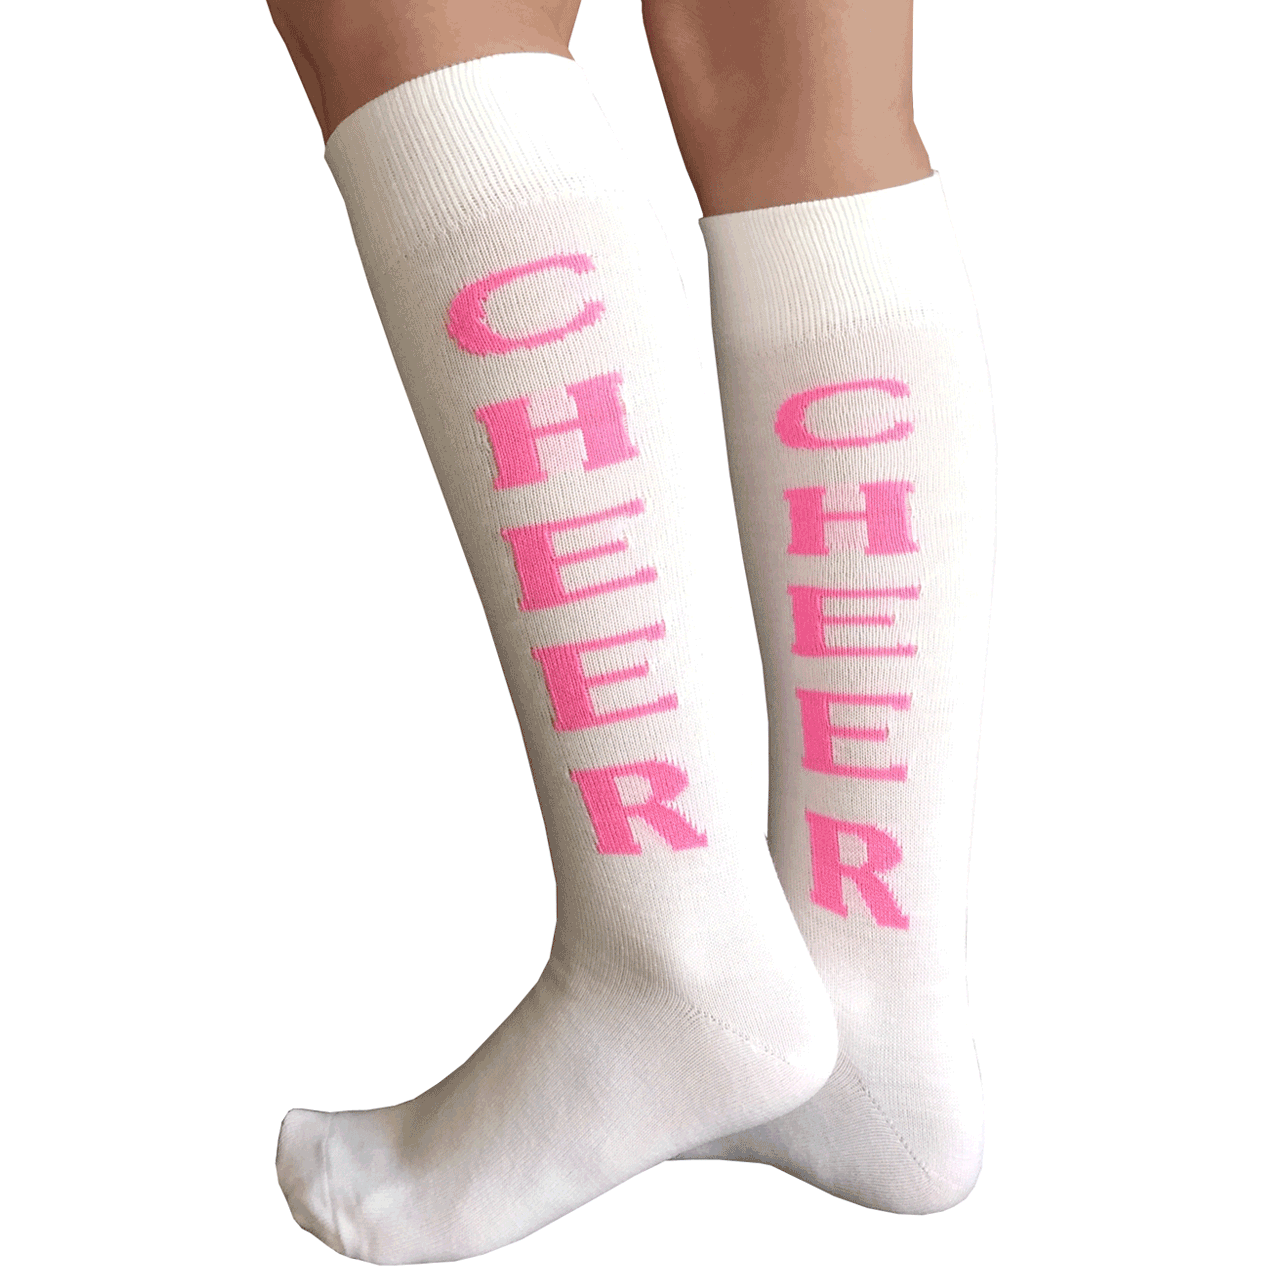 daniel mueth add cheer knee high socks photo